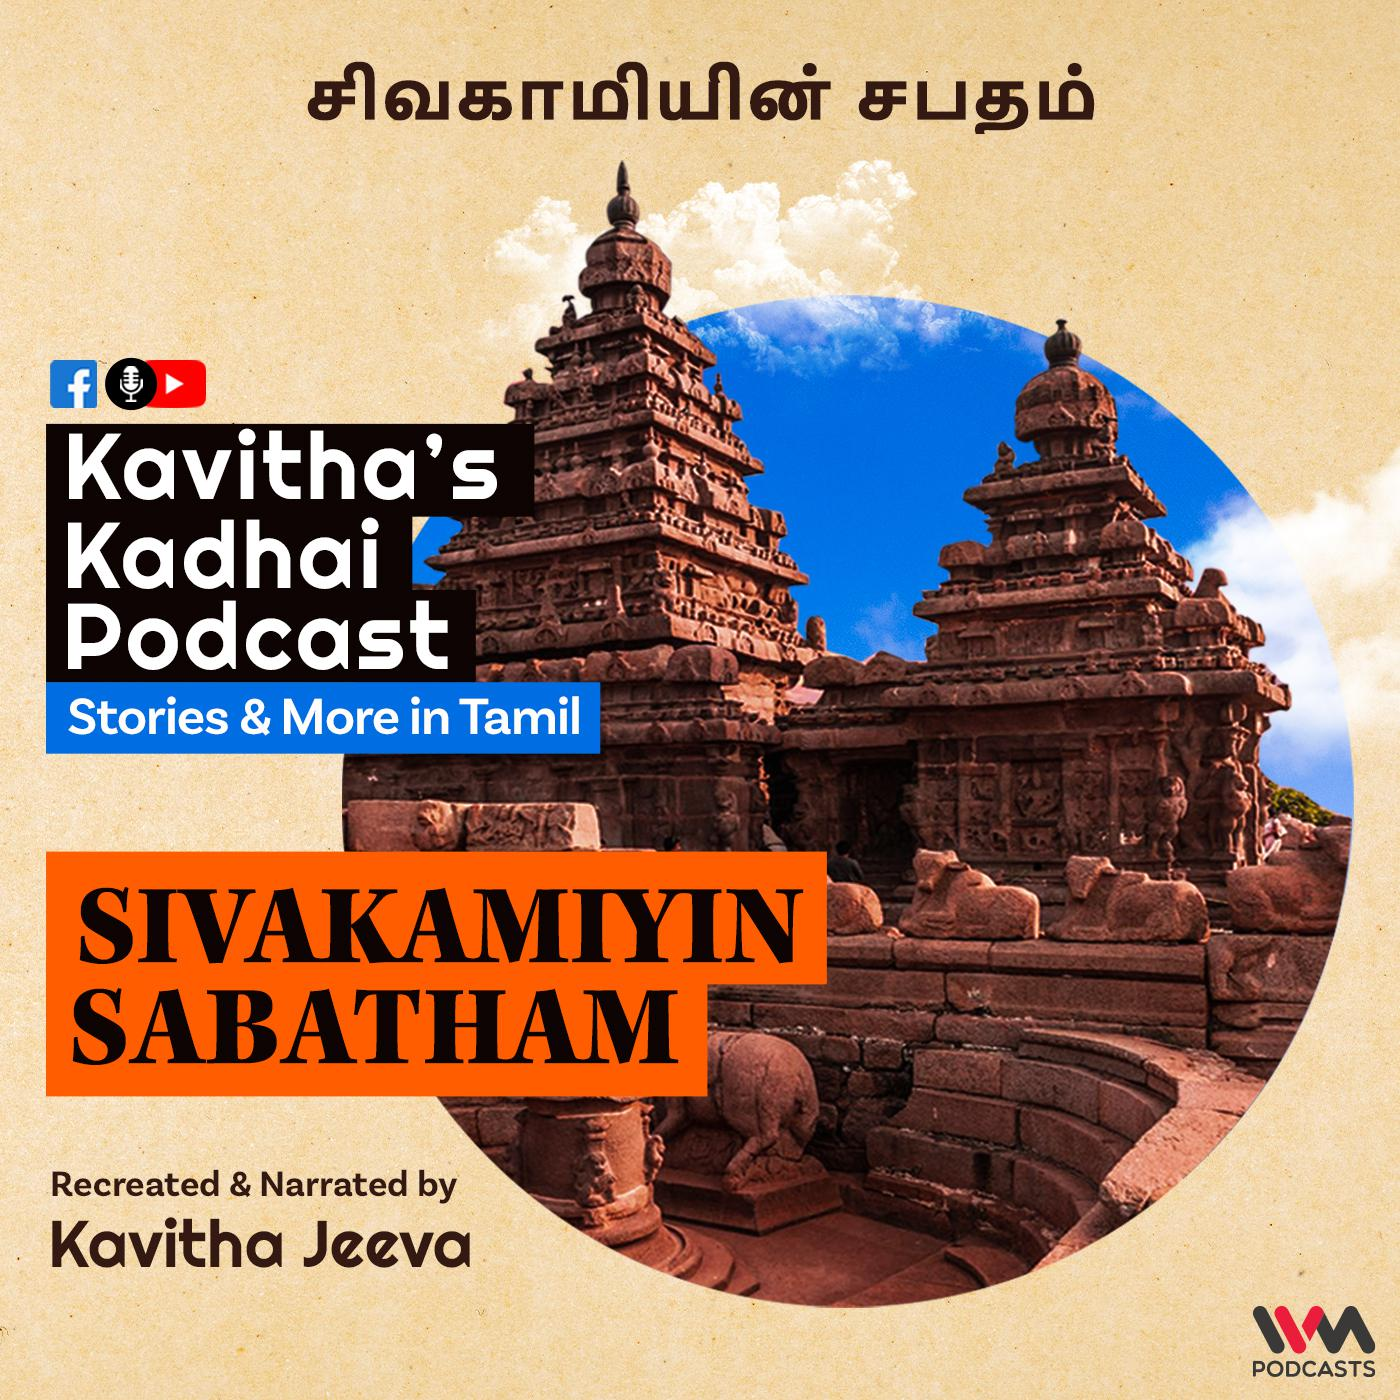 KadhaiPodcast's Sivakamiyin Sabatham with Kavitha Jeeva - Episode #137